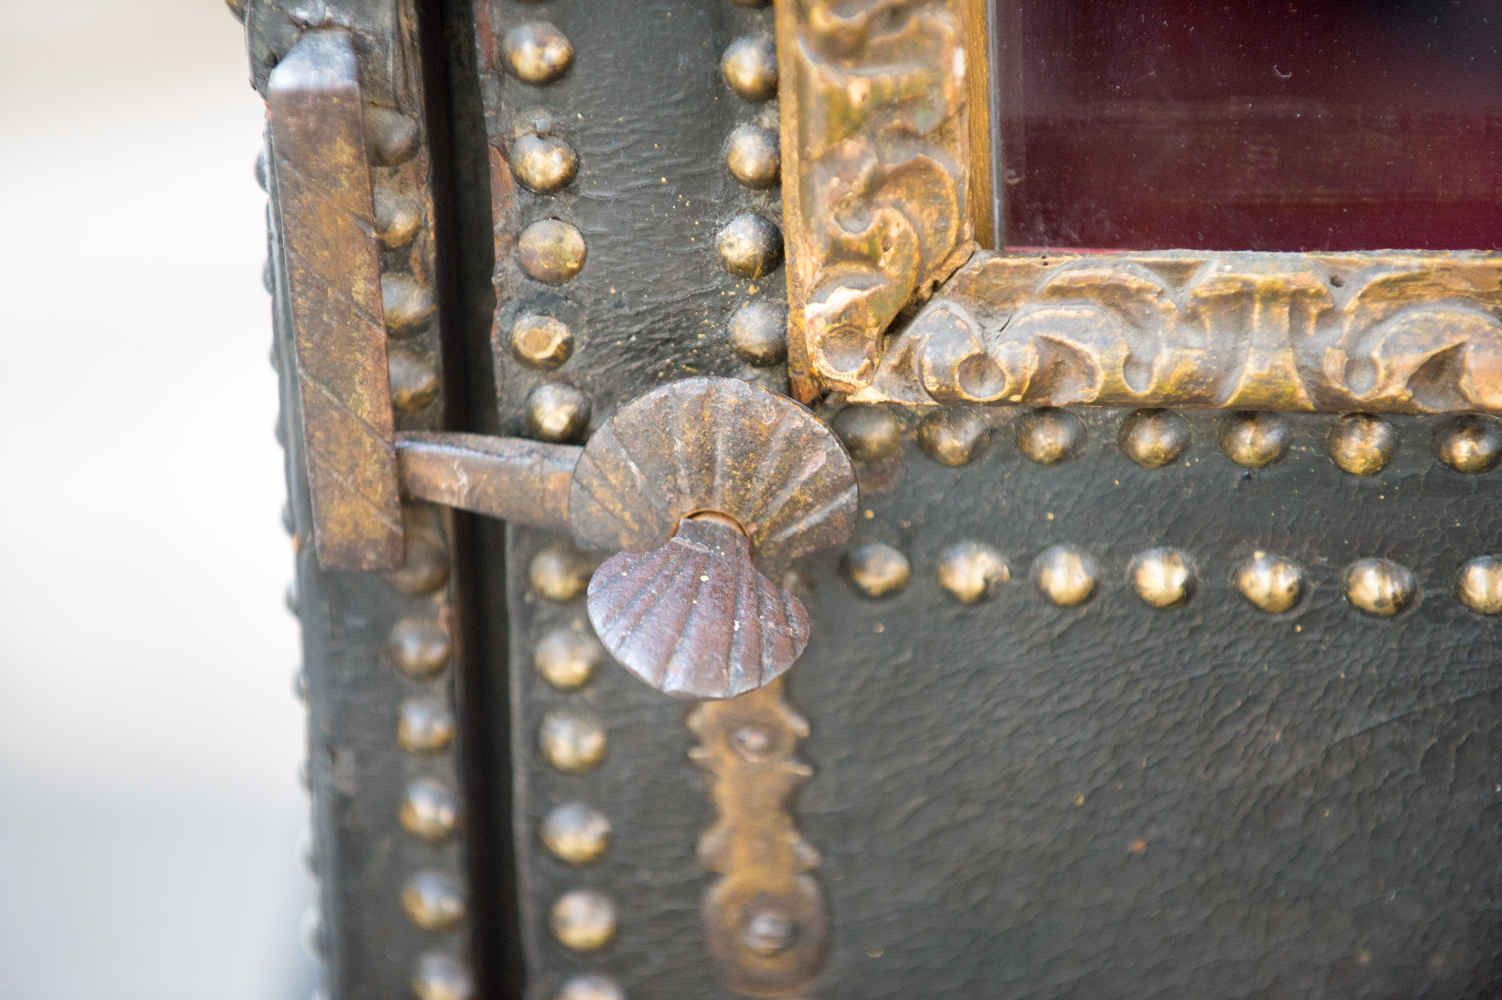 Door catch with shell markings